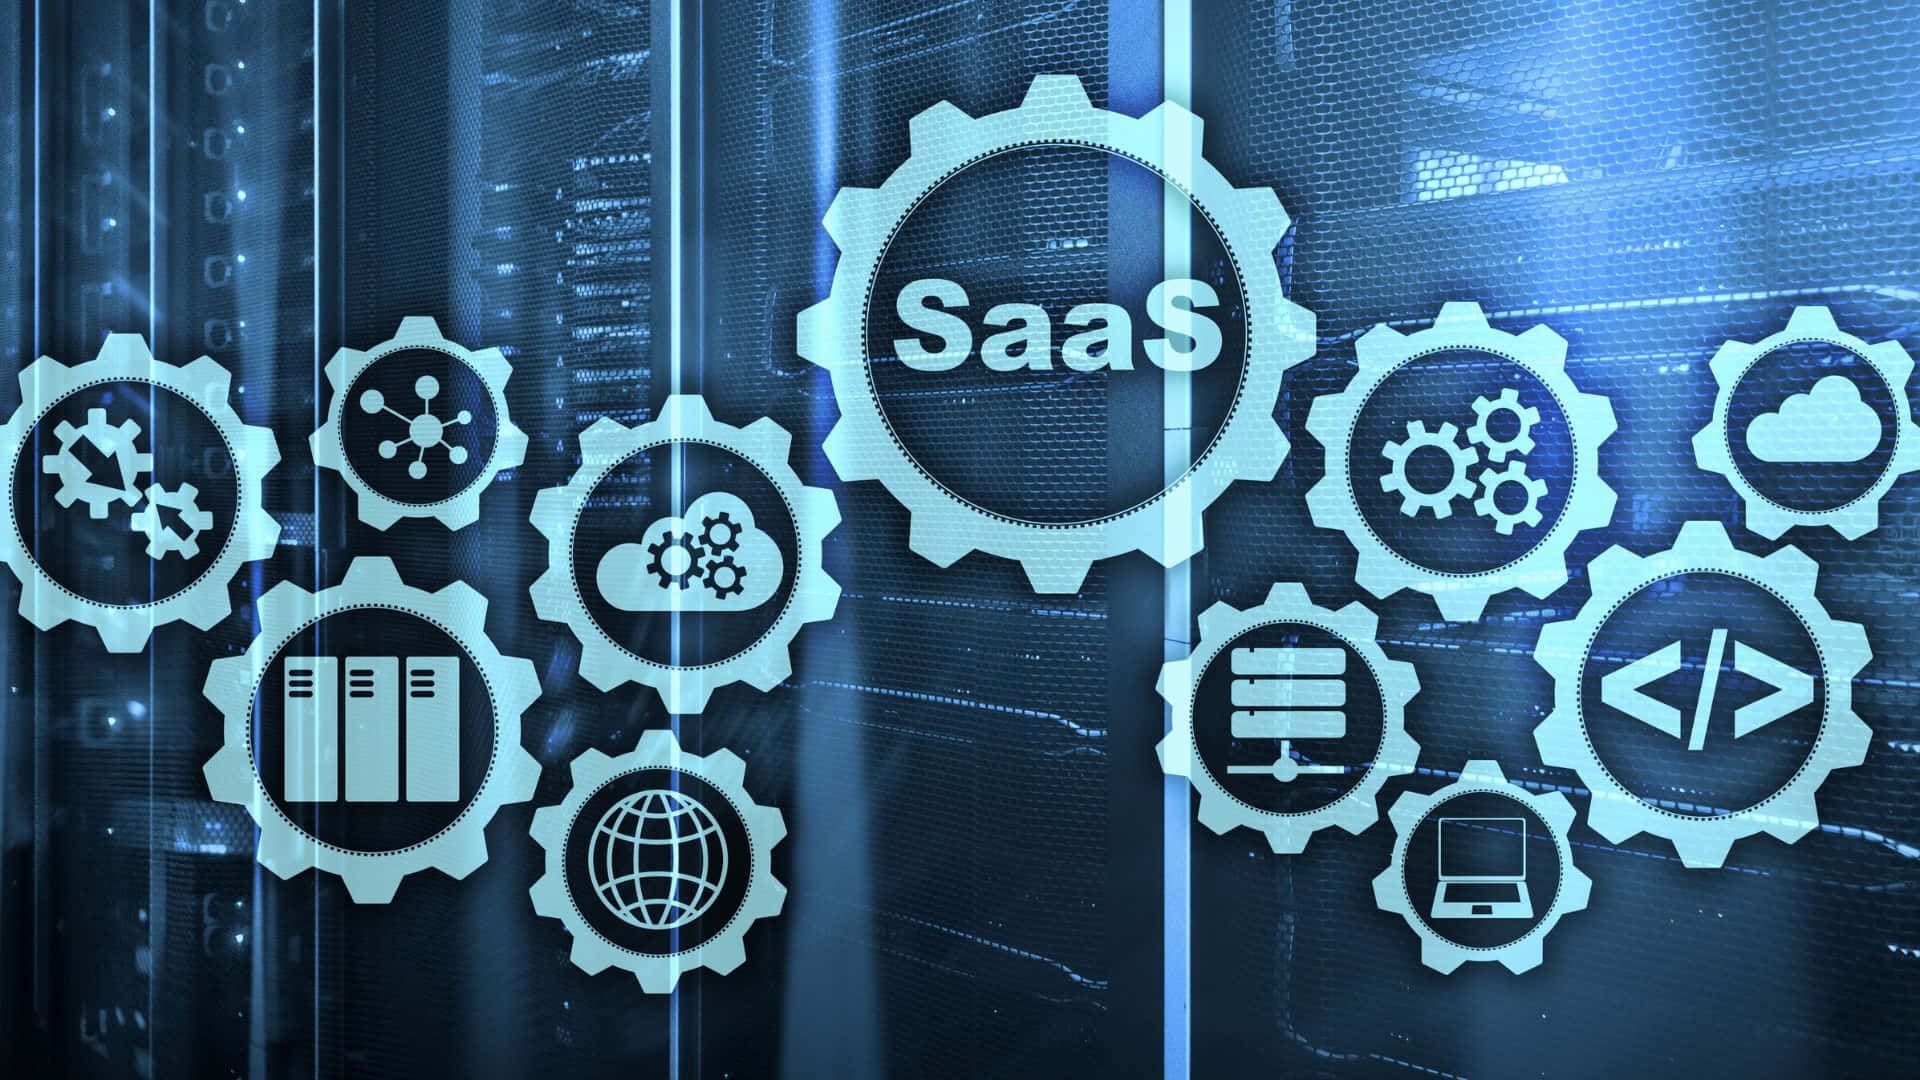 Saa S Softwareasa Service Concept